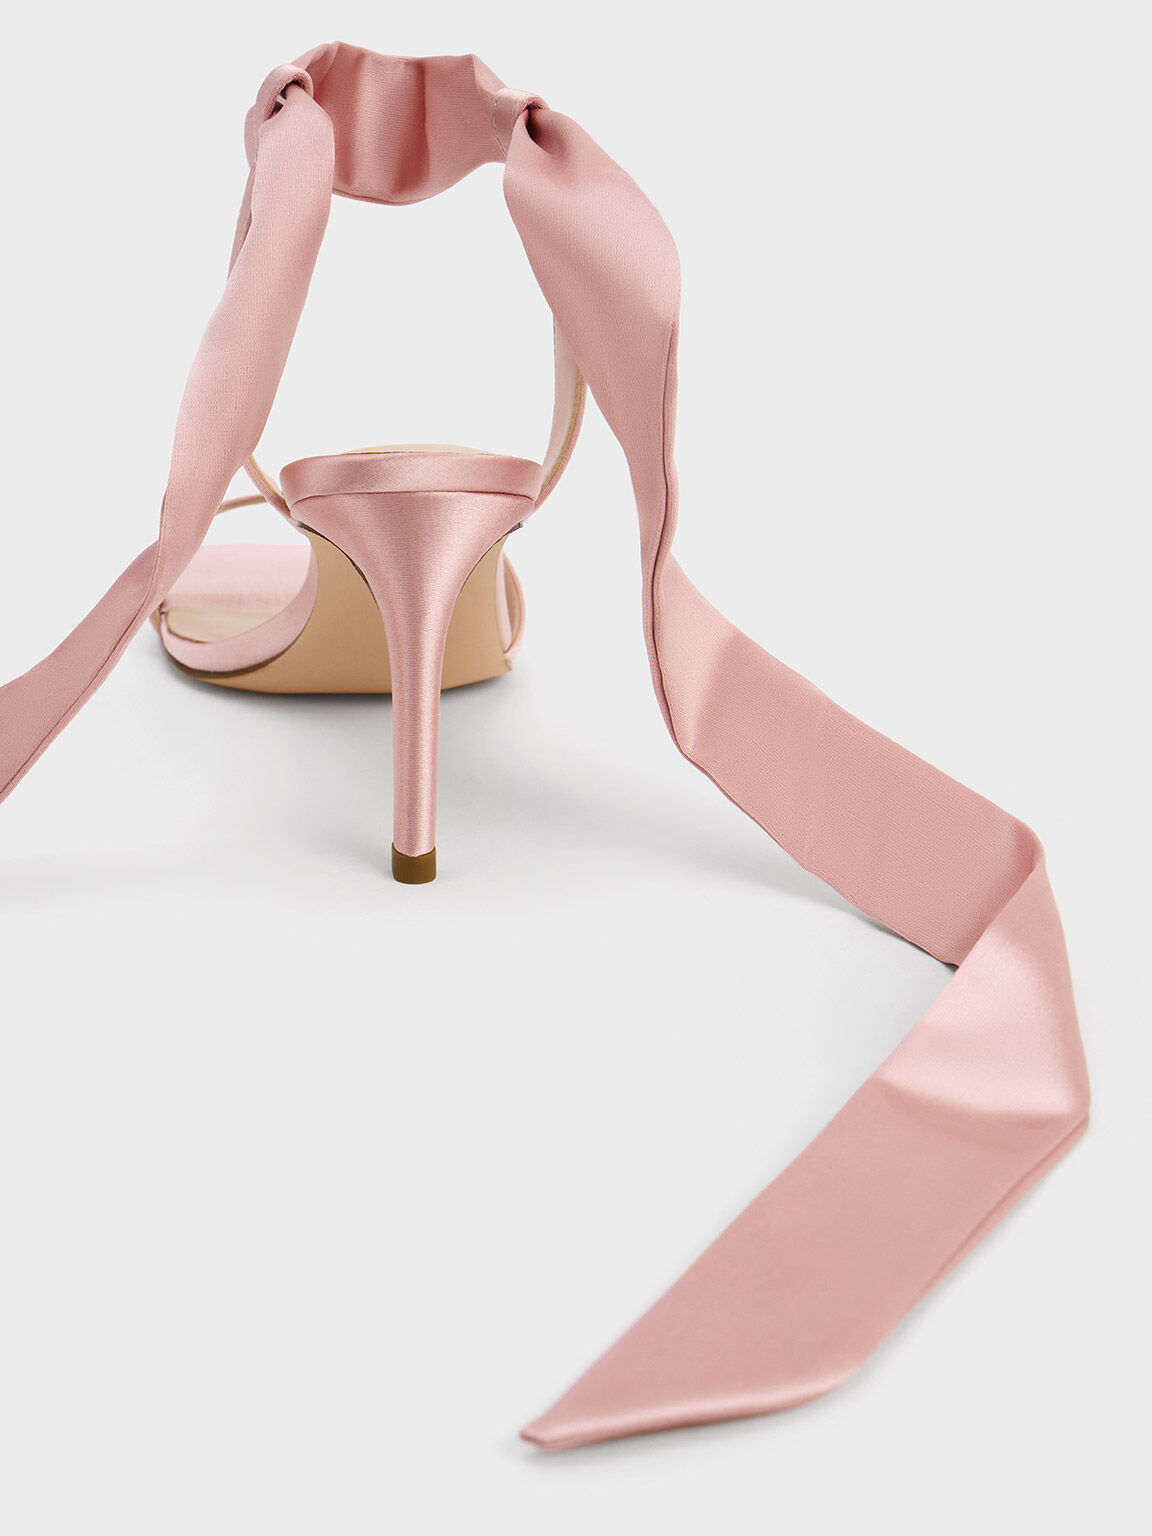 Heart In D Bright Pink Heels Platform Shoe 5.5 Inch Cosplay Women 5.5 | eBay